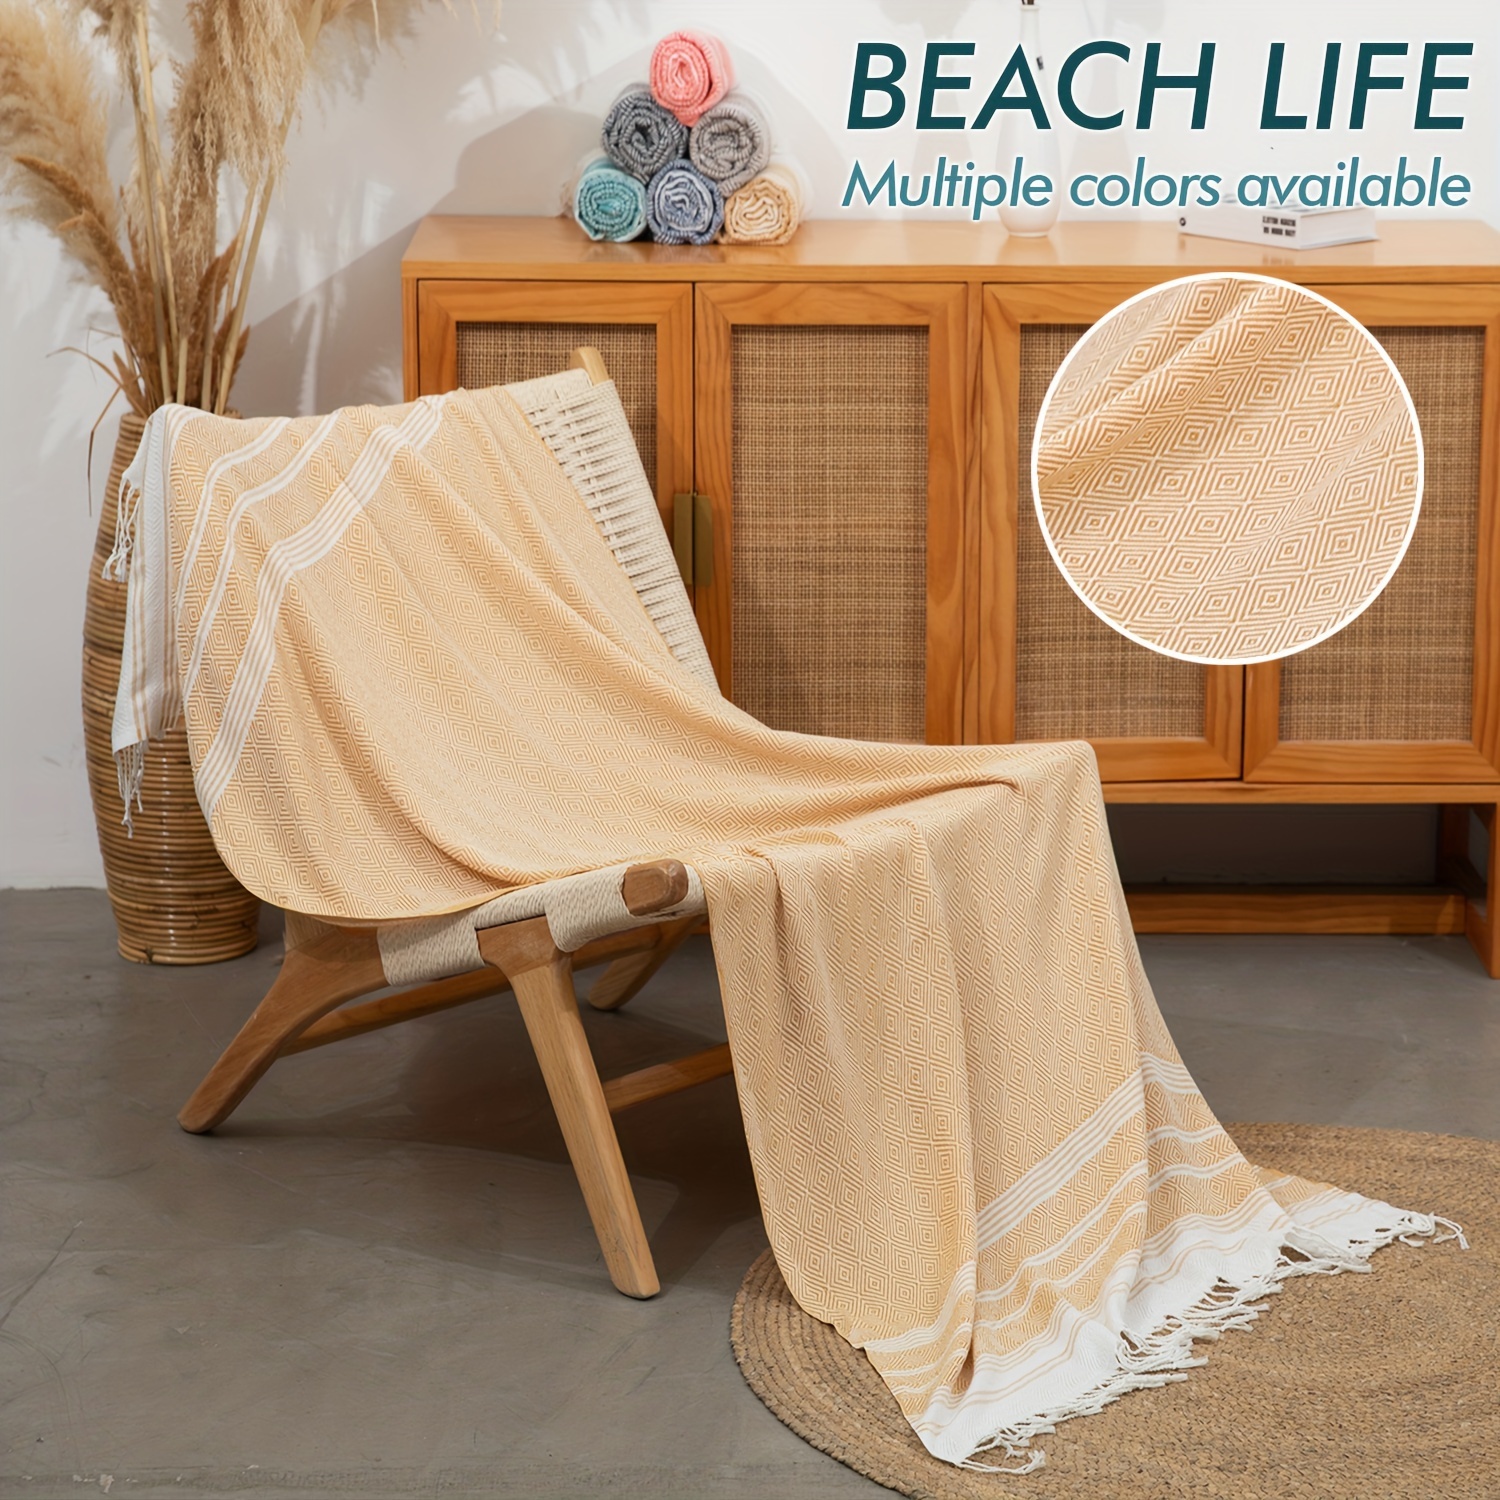 

1pc Oversized Turkish Beach Towel, Quick Drying Absorbent Beach Towel, Sandproof Lightweight Beach Blanket, For Outdoor Travel Camping Summer Vacation, Beach Essentials